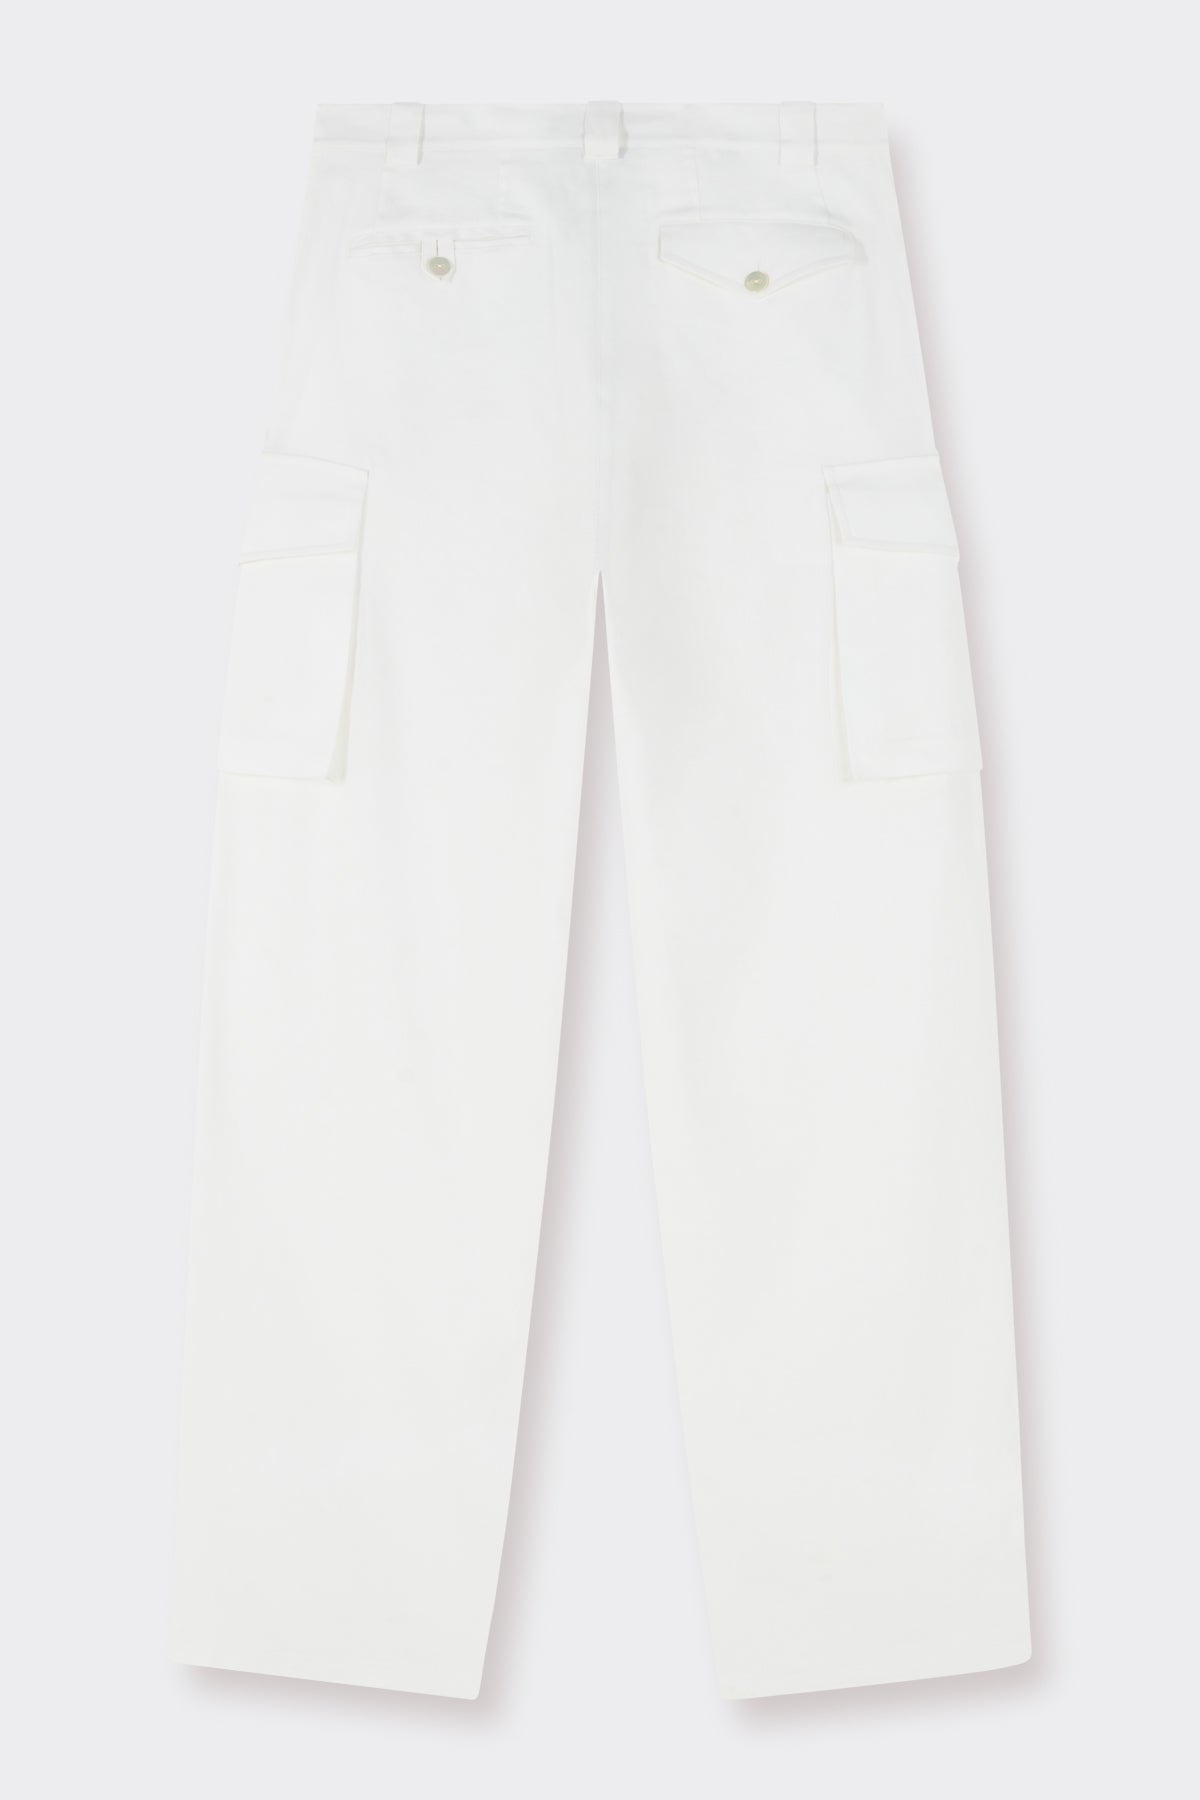 Ashanti Trouser in Pearl White| Noon by Noor